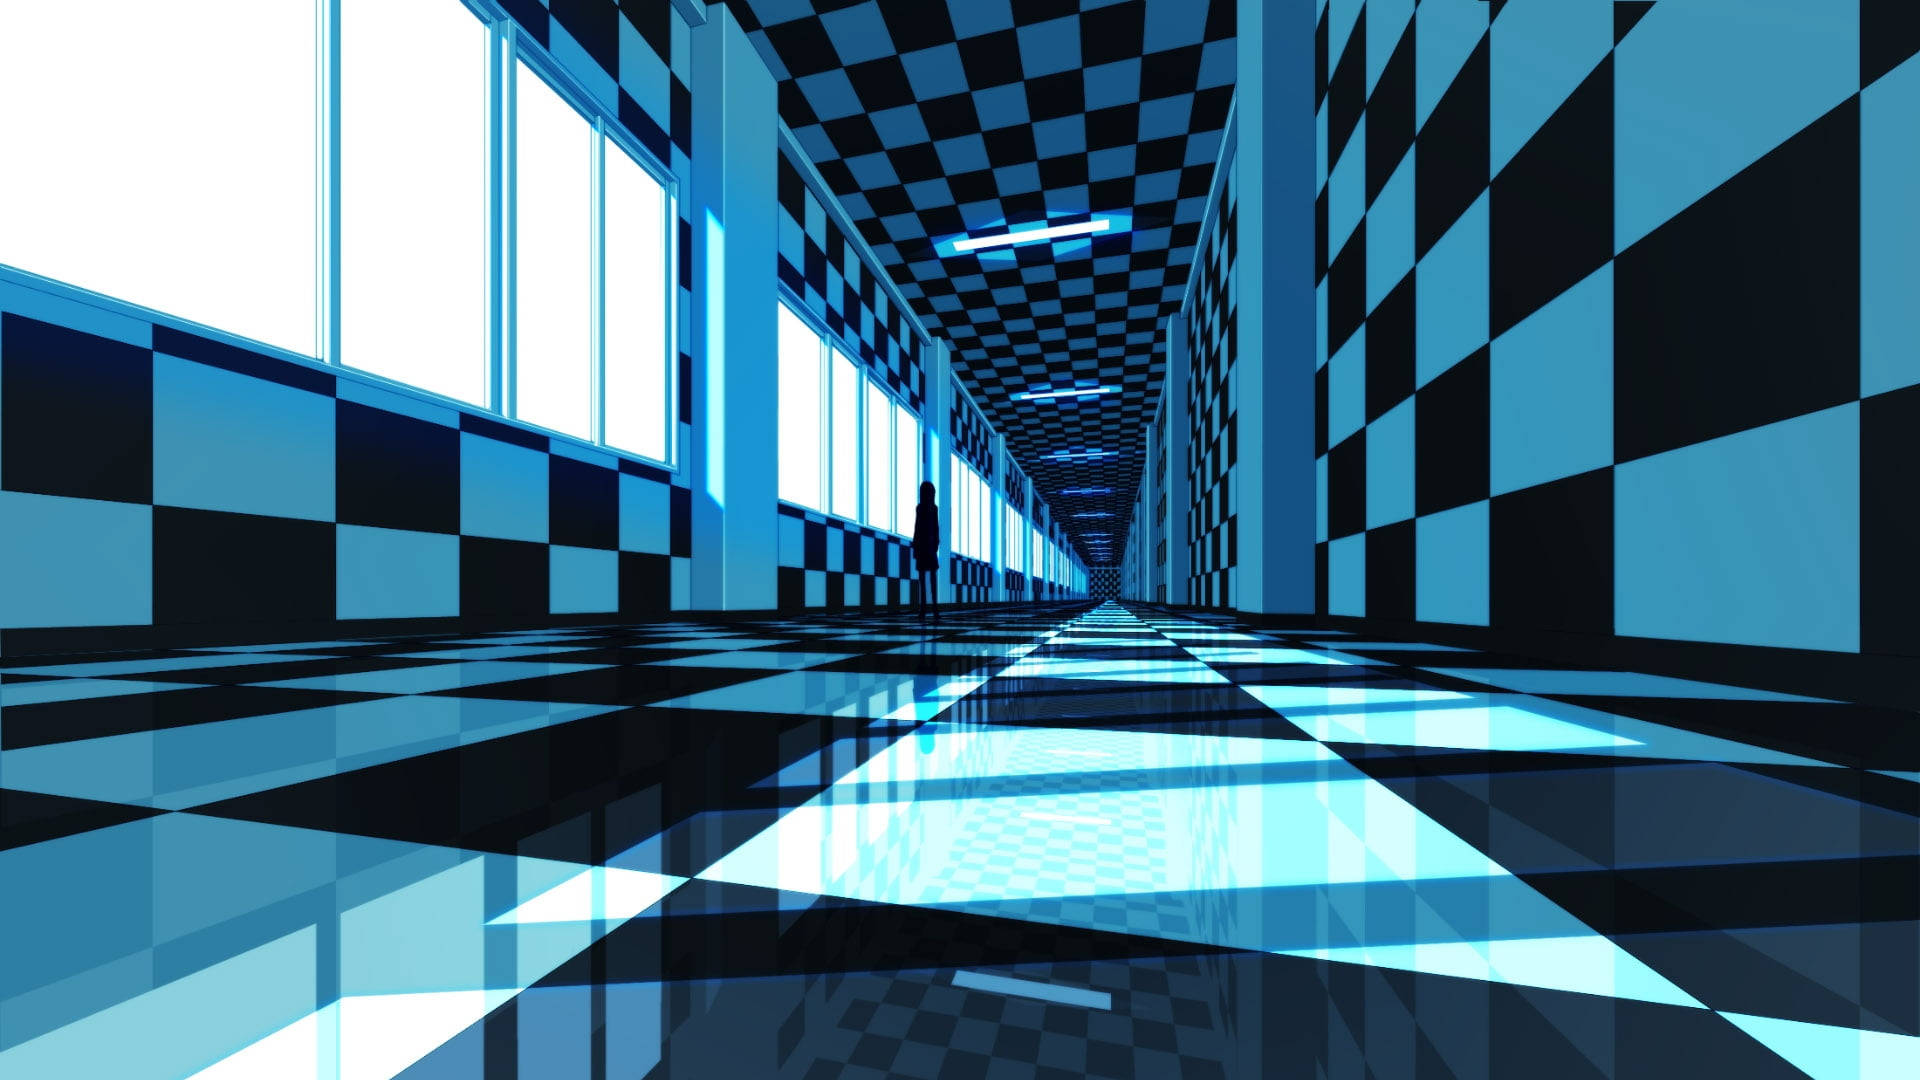 Mesmerizing Blue and Black Checkered Hallway Wallpaper